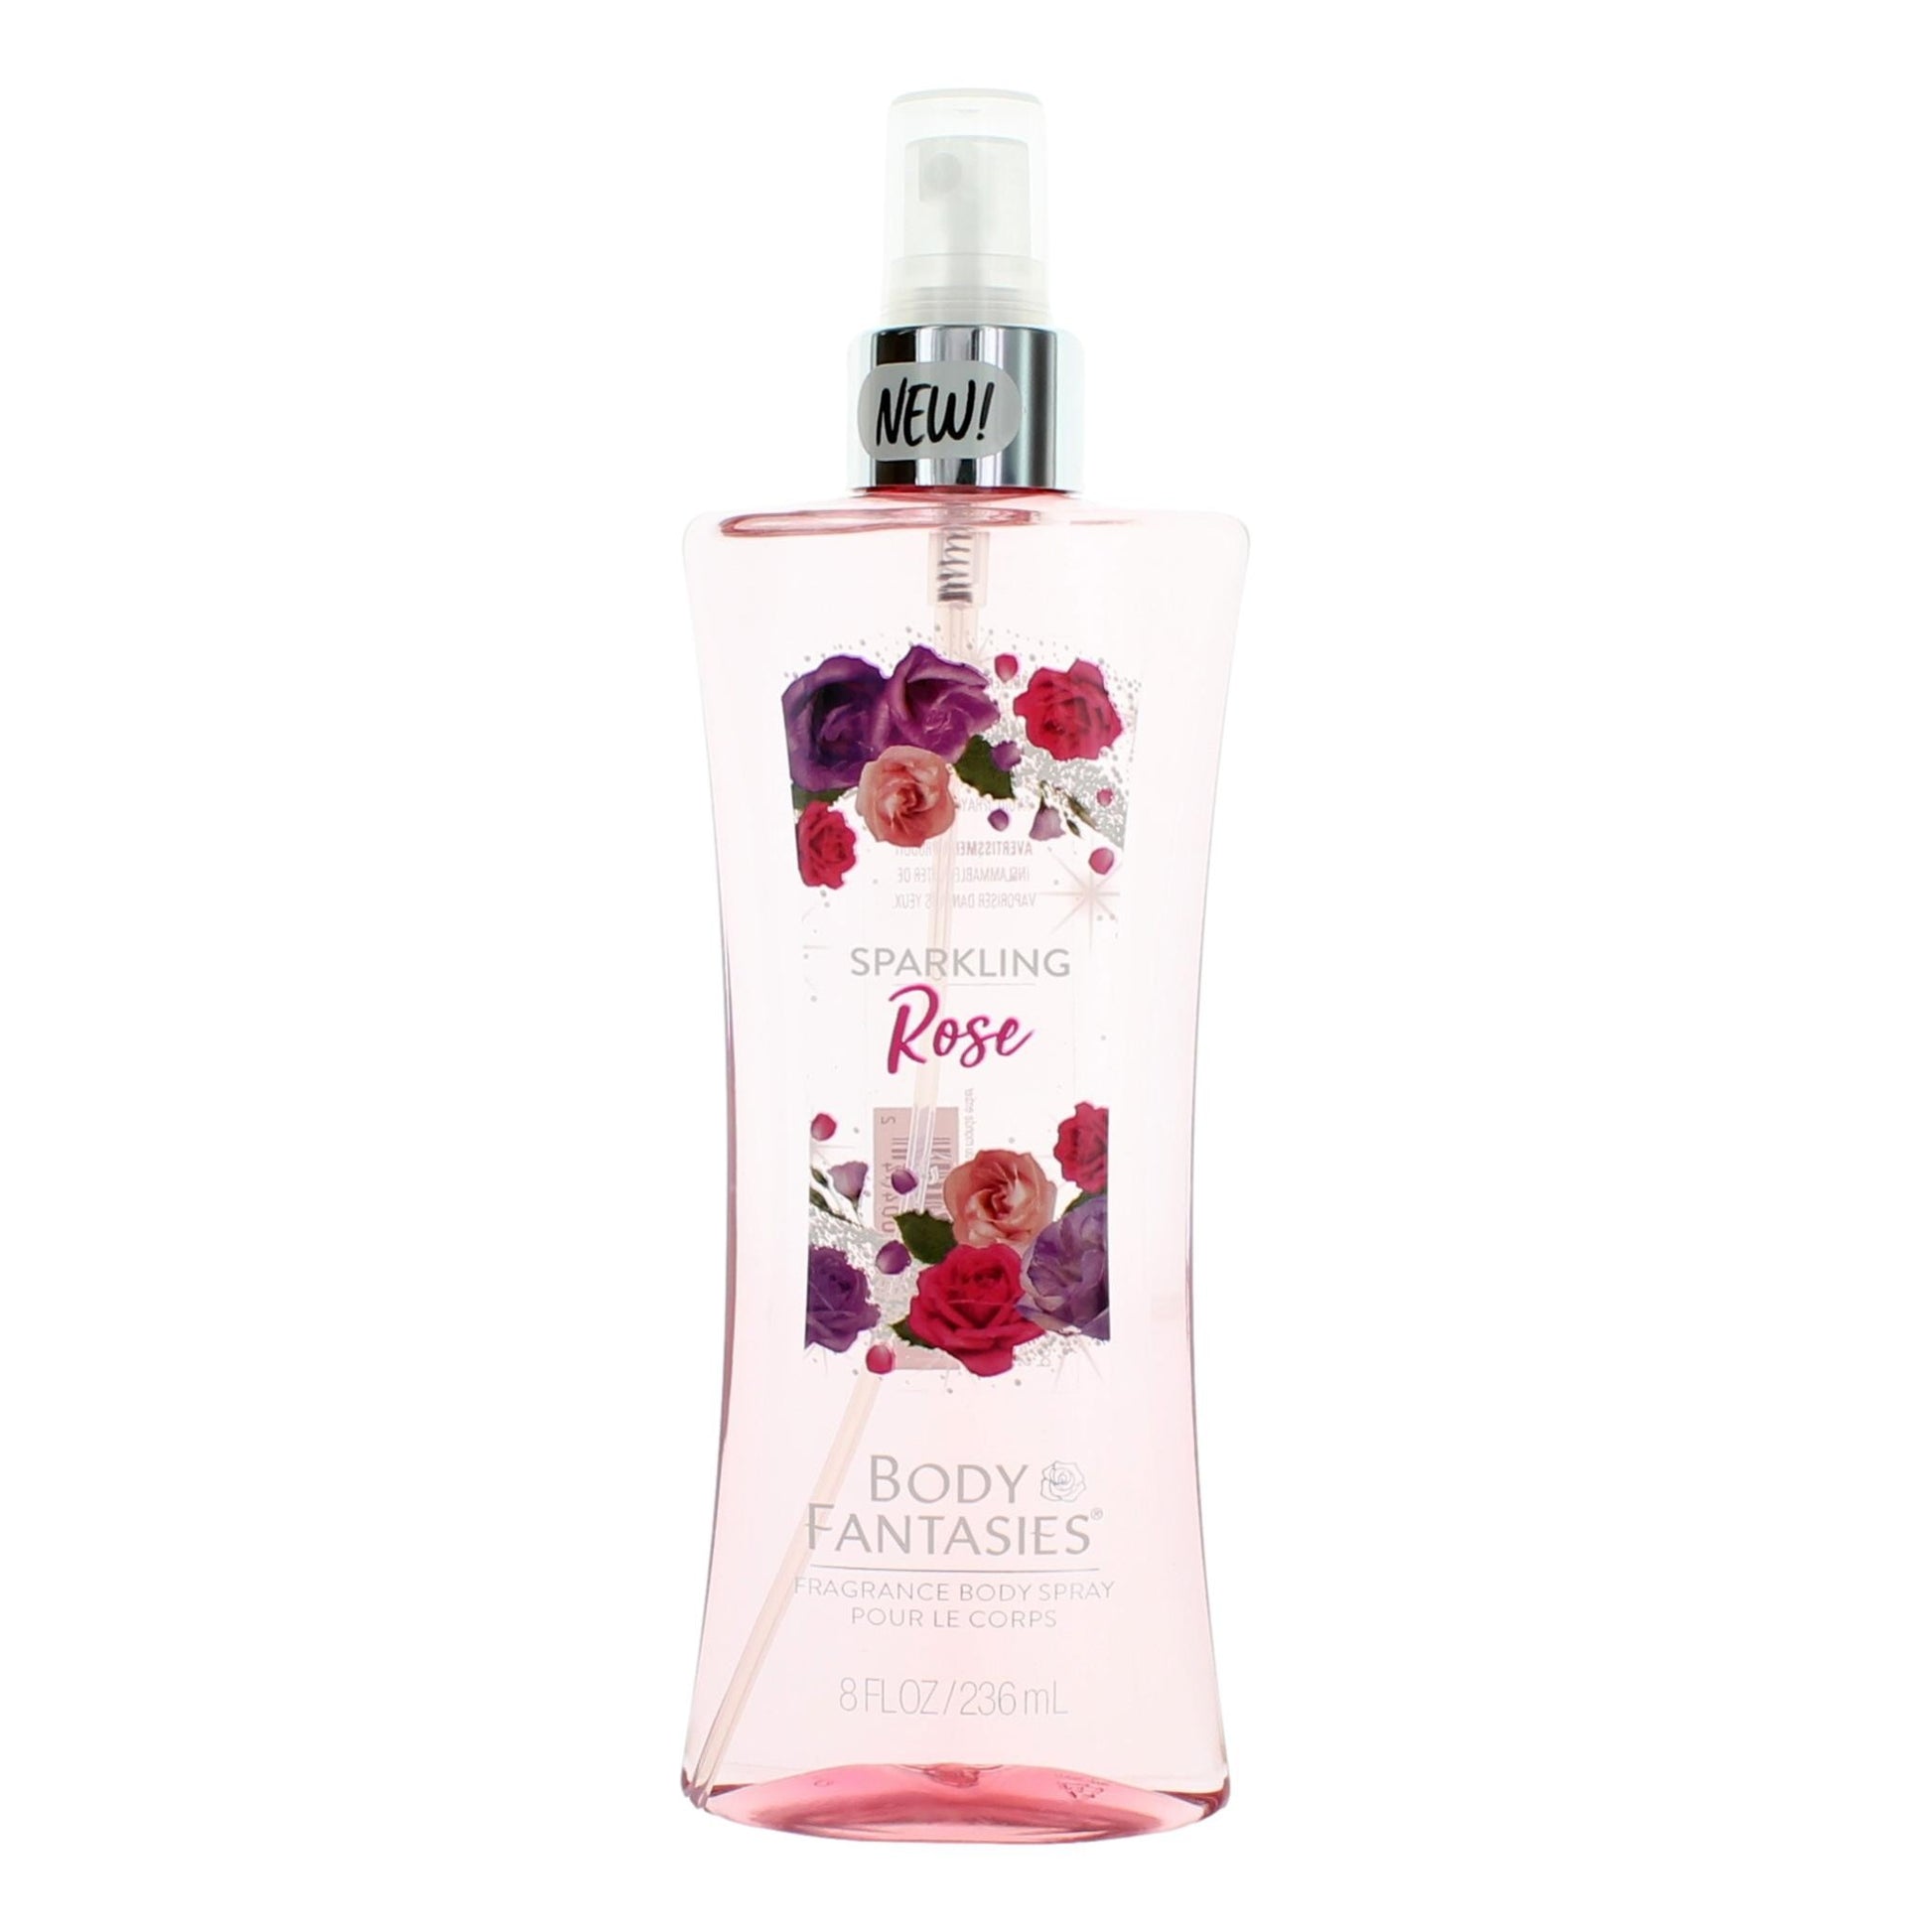 Sparkling Roses by Body Fantasies, 8 oz Fragrance Body Spray for Women